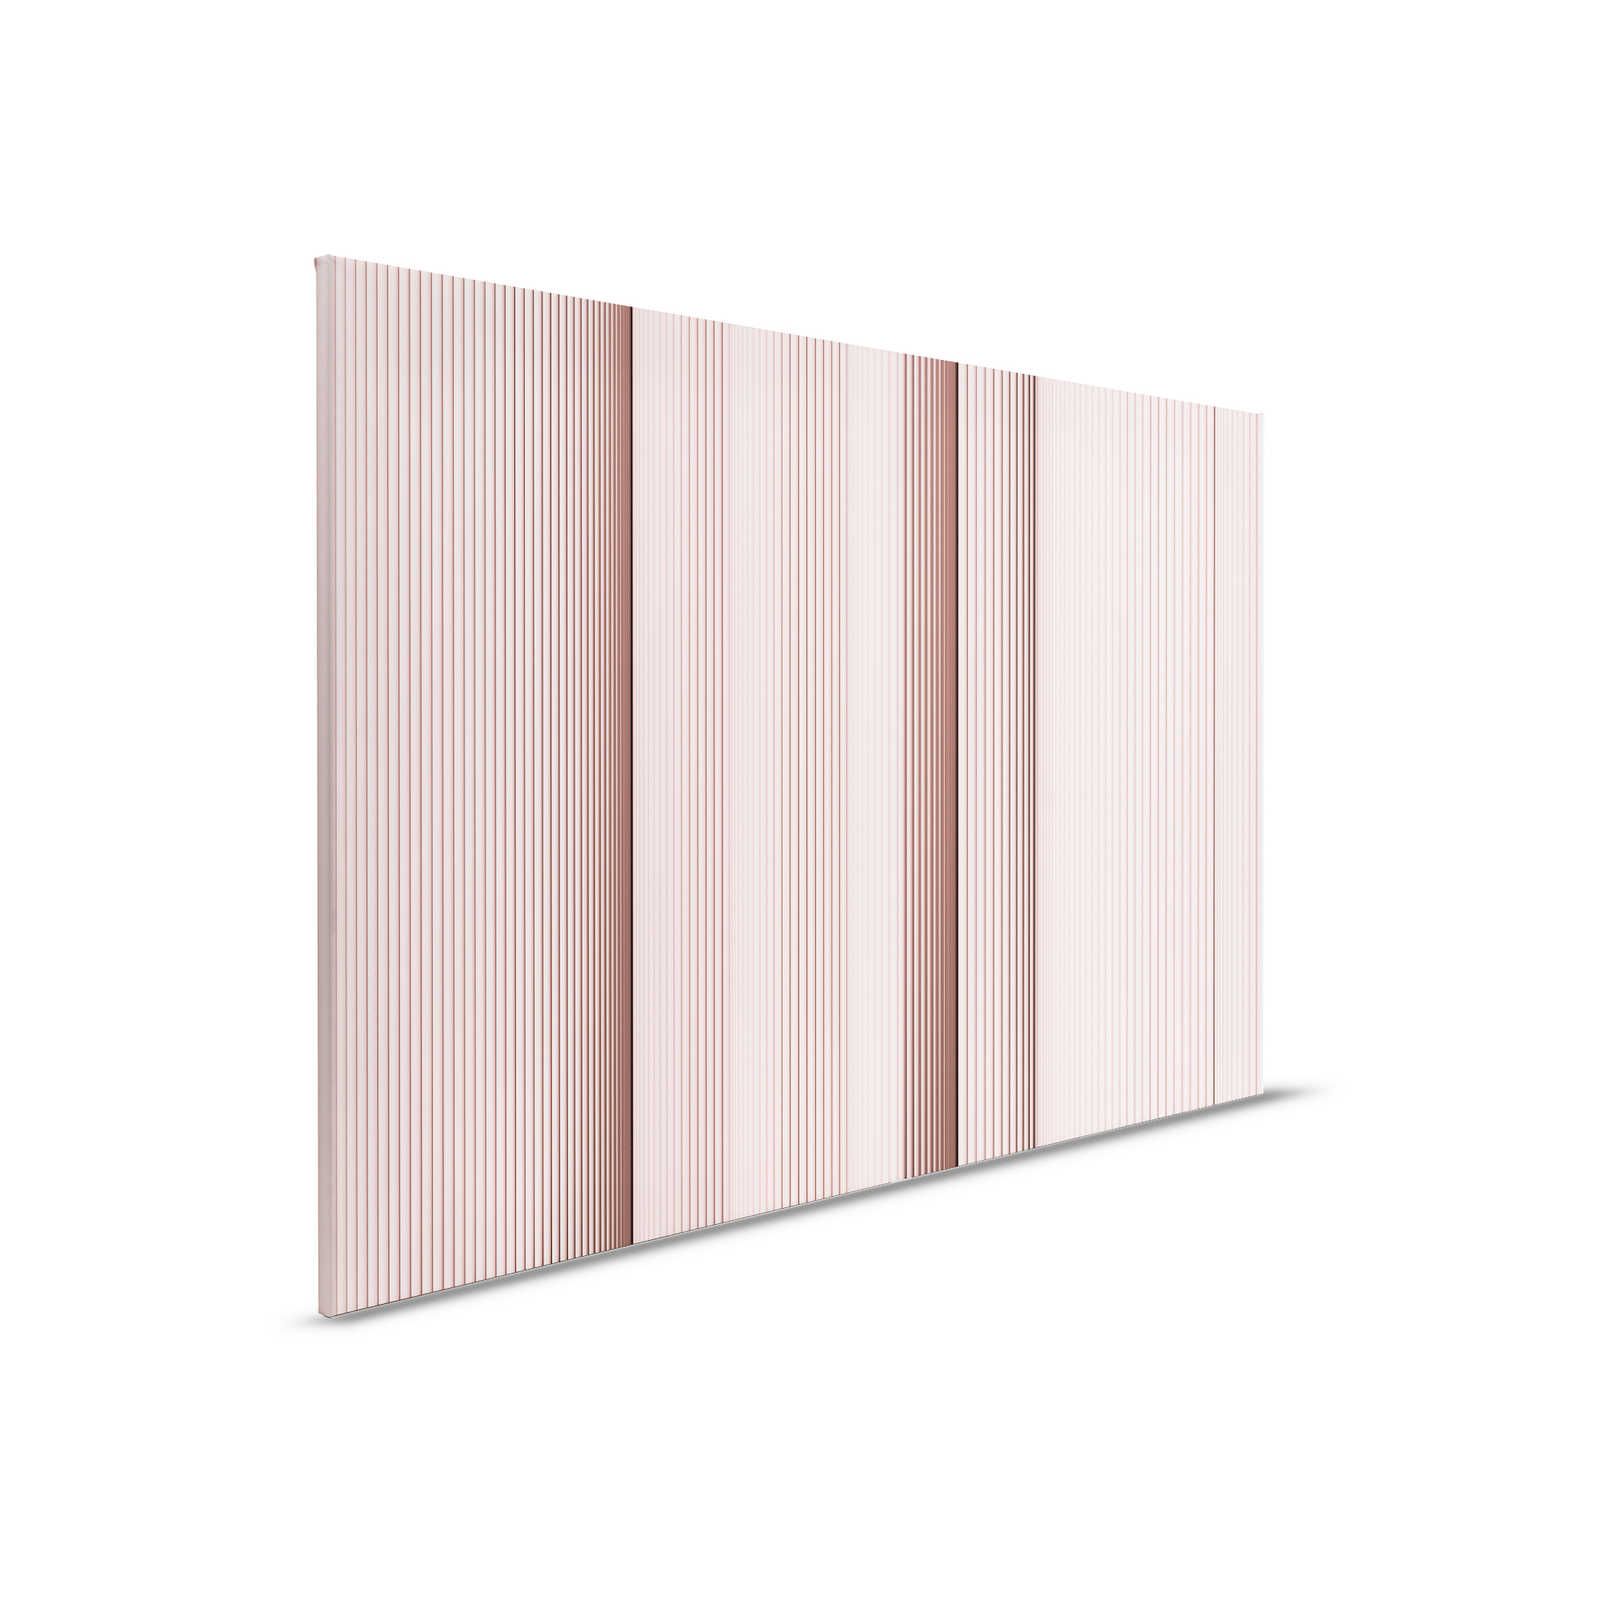         Magic Wall 4 - Streifen Leinwandbild mit 3D Illusion Effekt, Rosa & Weiß – 0,90 m x 0,60 m
    